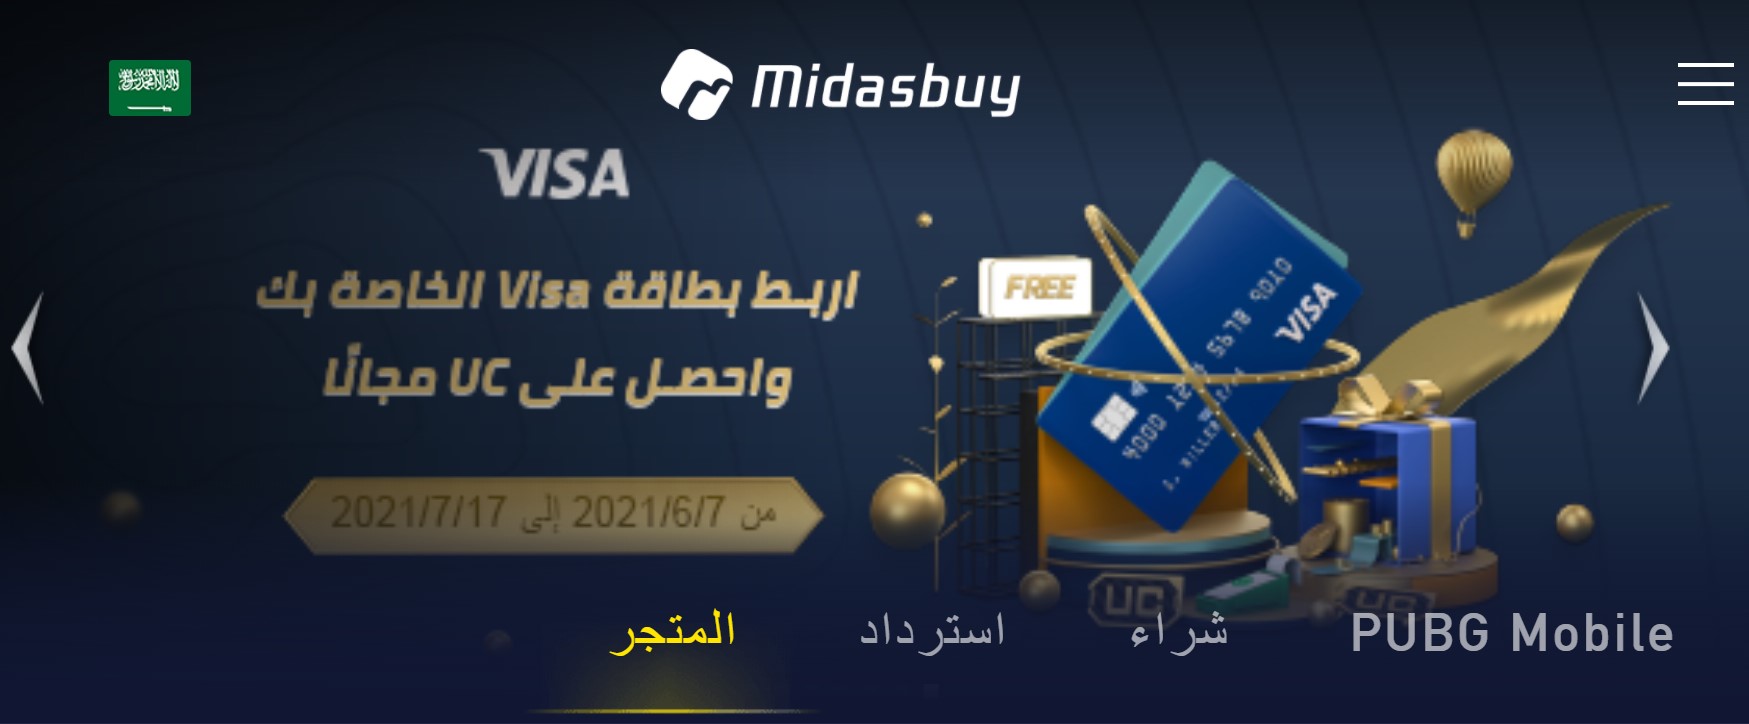 pubg mobile عروض شحن شدات ببجي موبايل 2021 موقع Midasbuy المجانية بربط الـ Visa